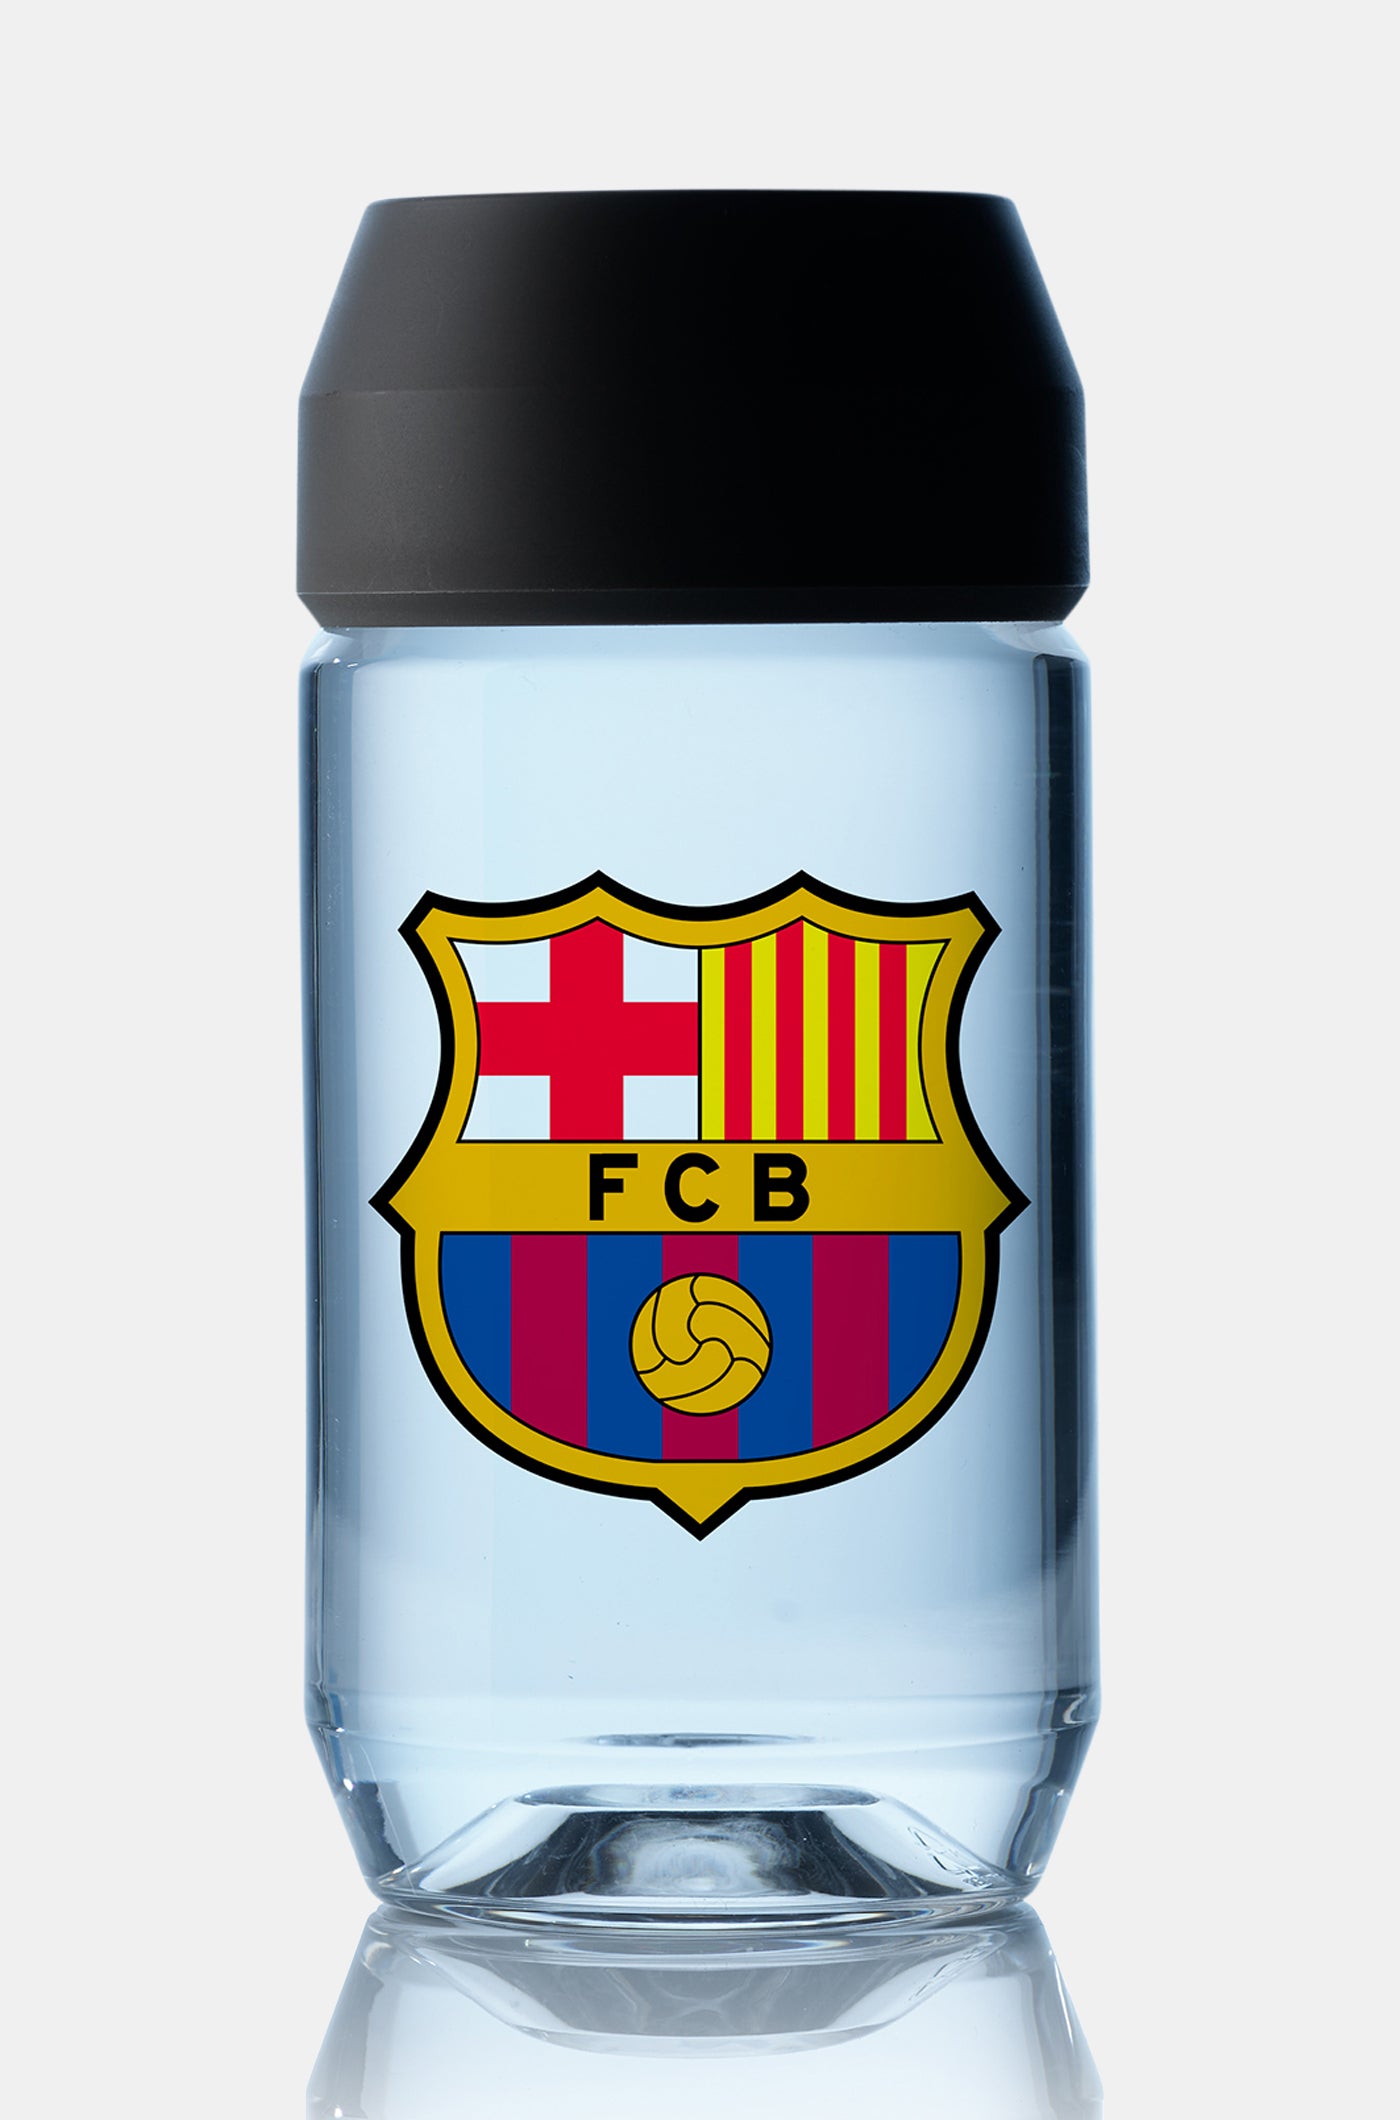 FC Barcelona Men's Team - Aquafigure Bottle including 5 Players